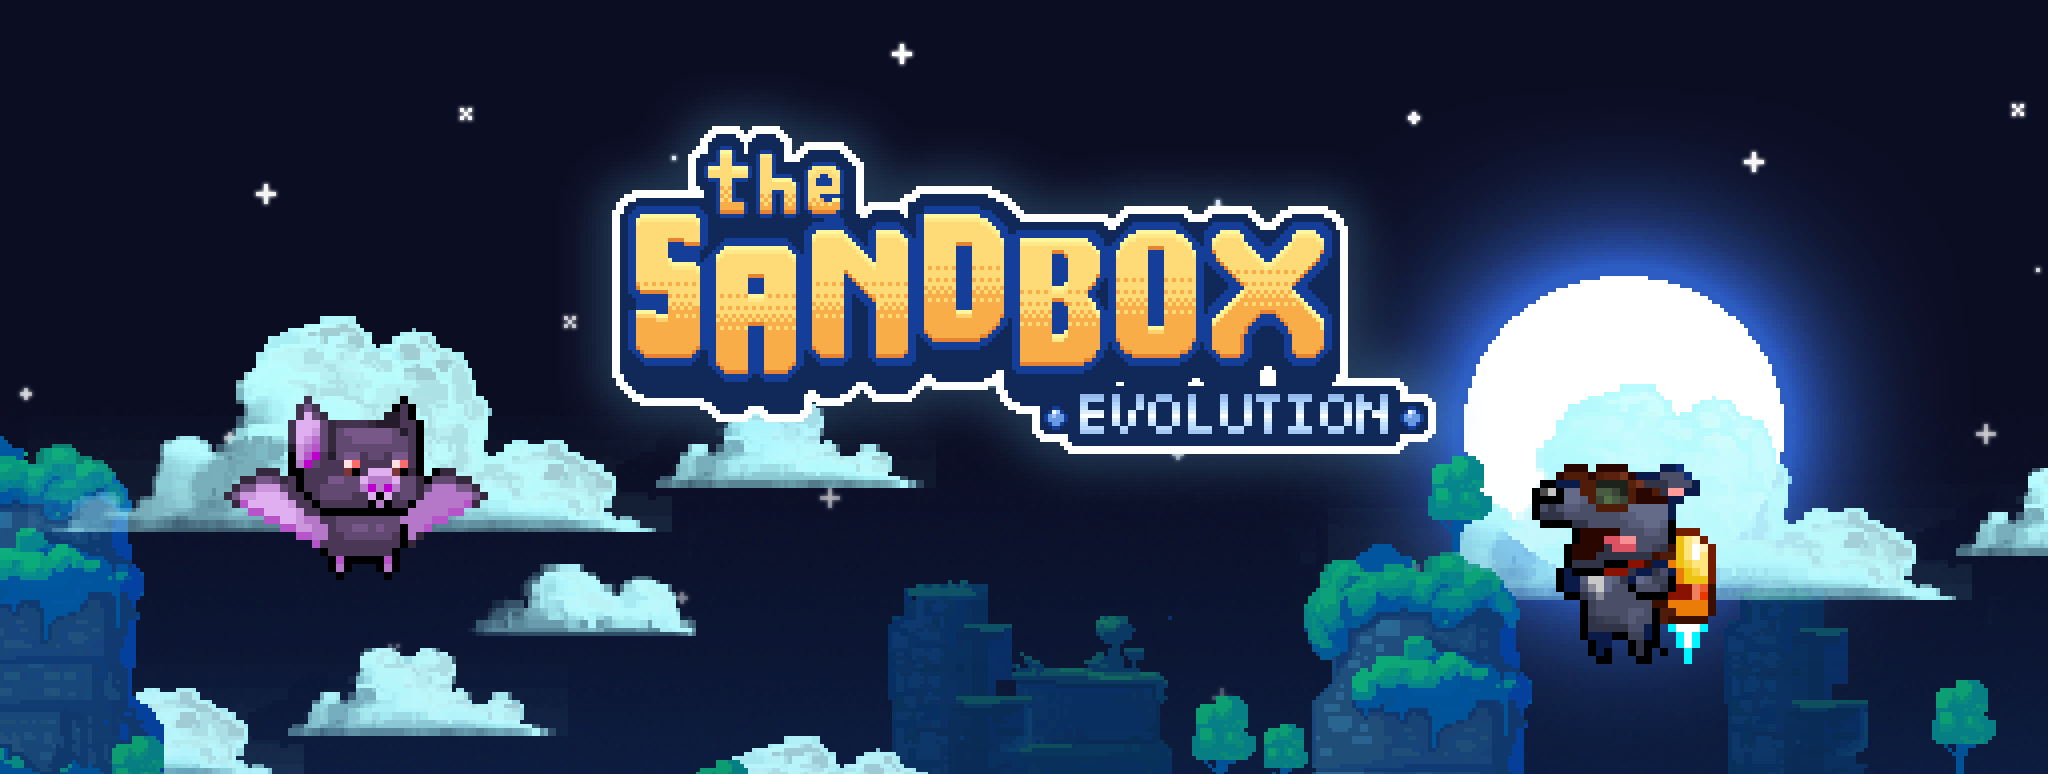 Preparing your assets for The Sandbox, by The Sandbox, The Sandbox